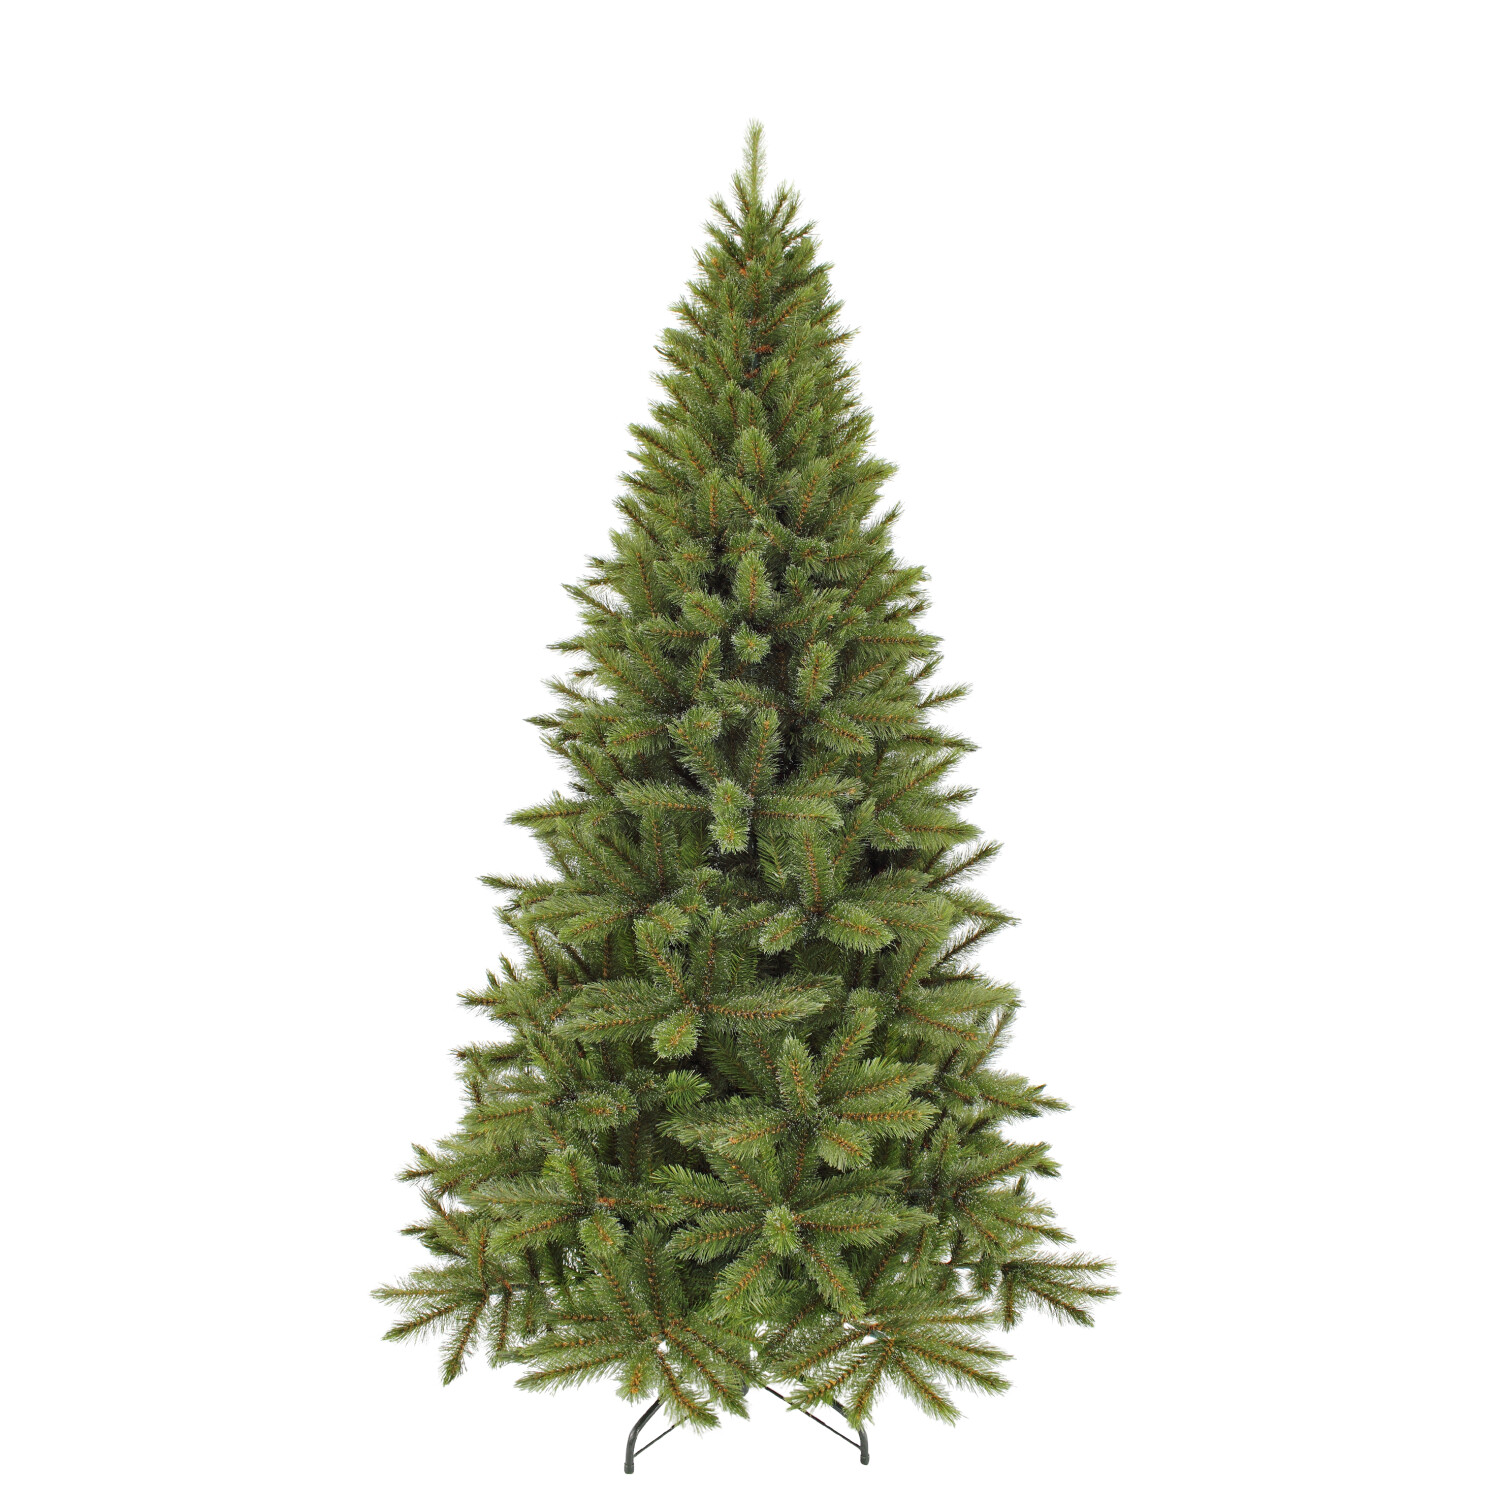 Afbeelding Kerstboom Forest Frosted Slim 230 cm groen triumph tree door Tuinadvies.be